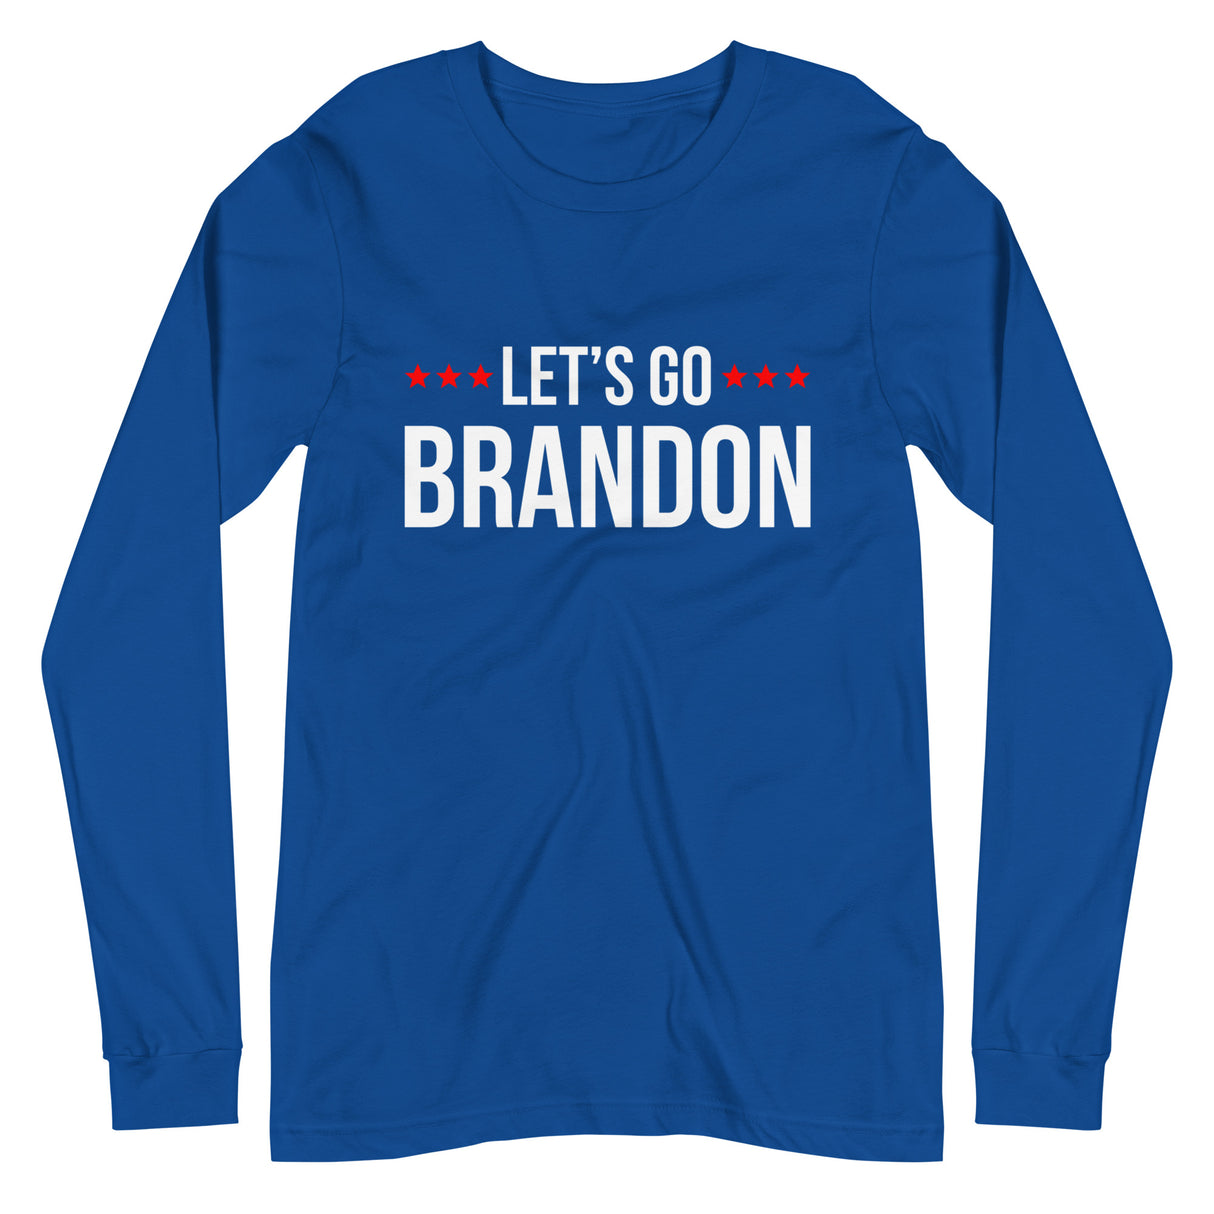 Let's Go Brandon Premium Long Sleeve Shirt